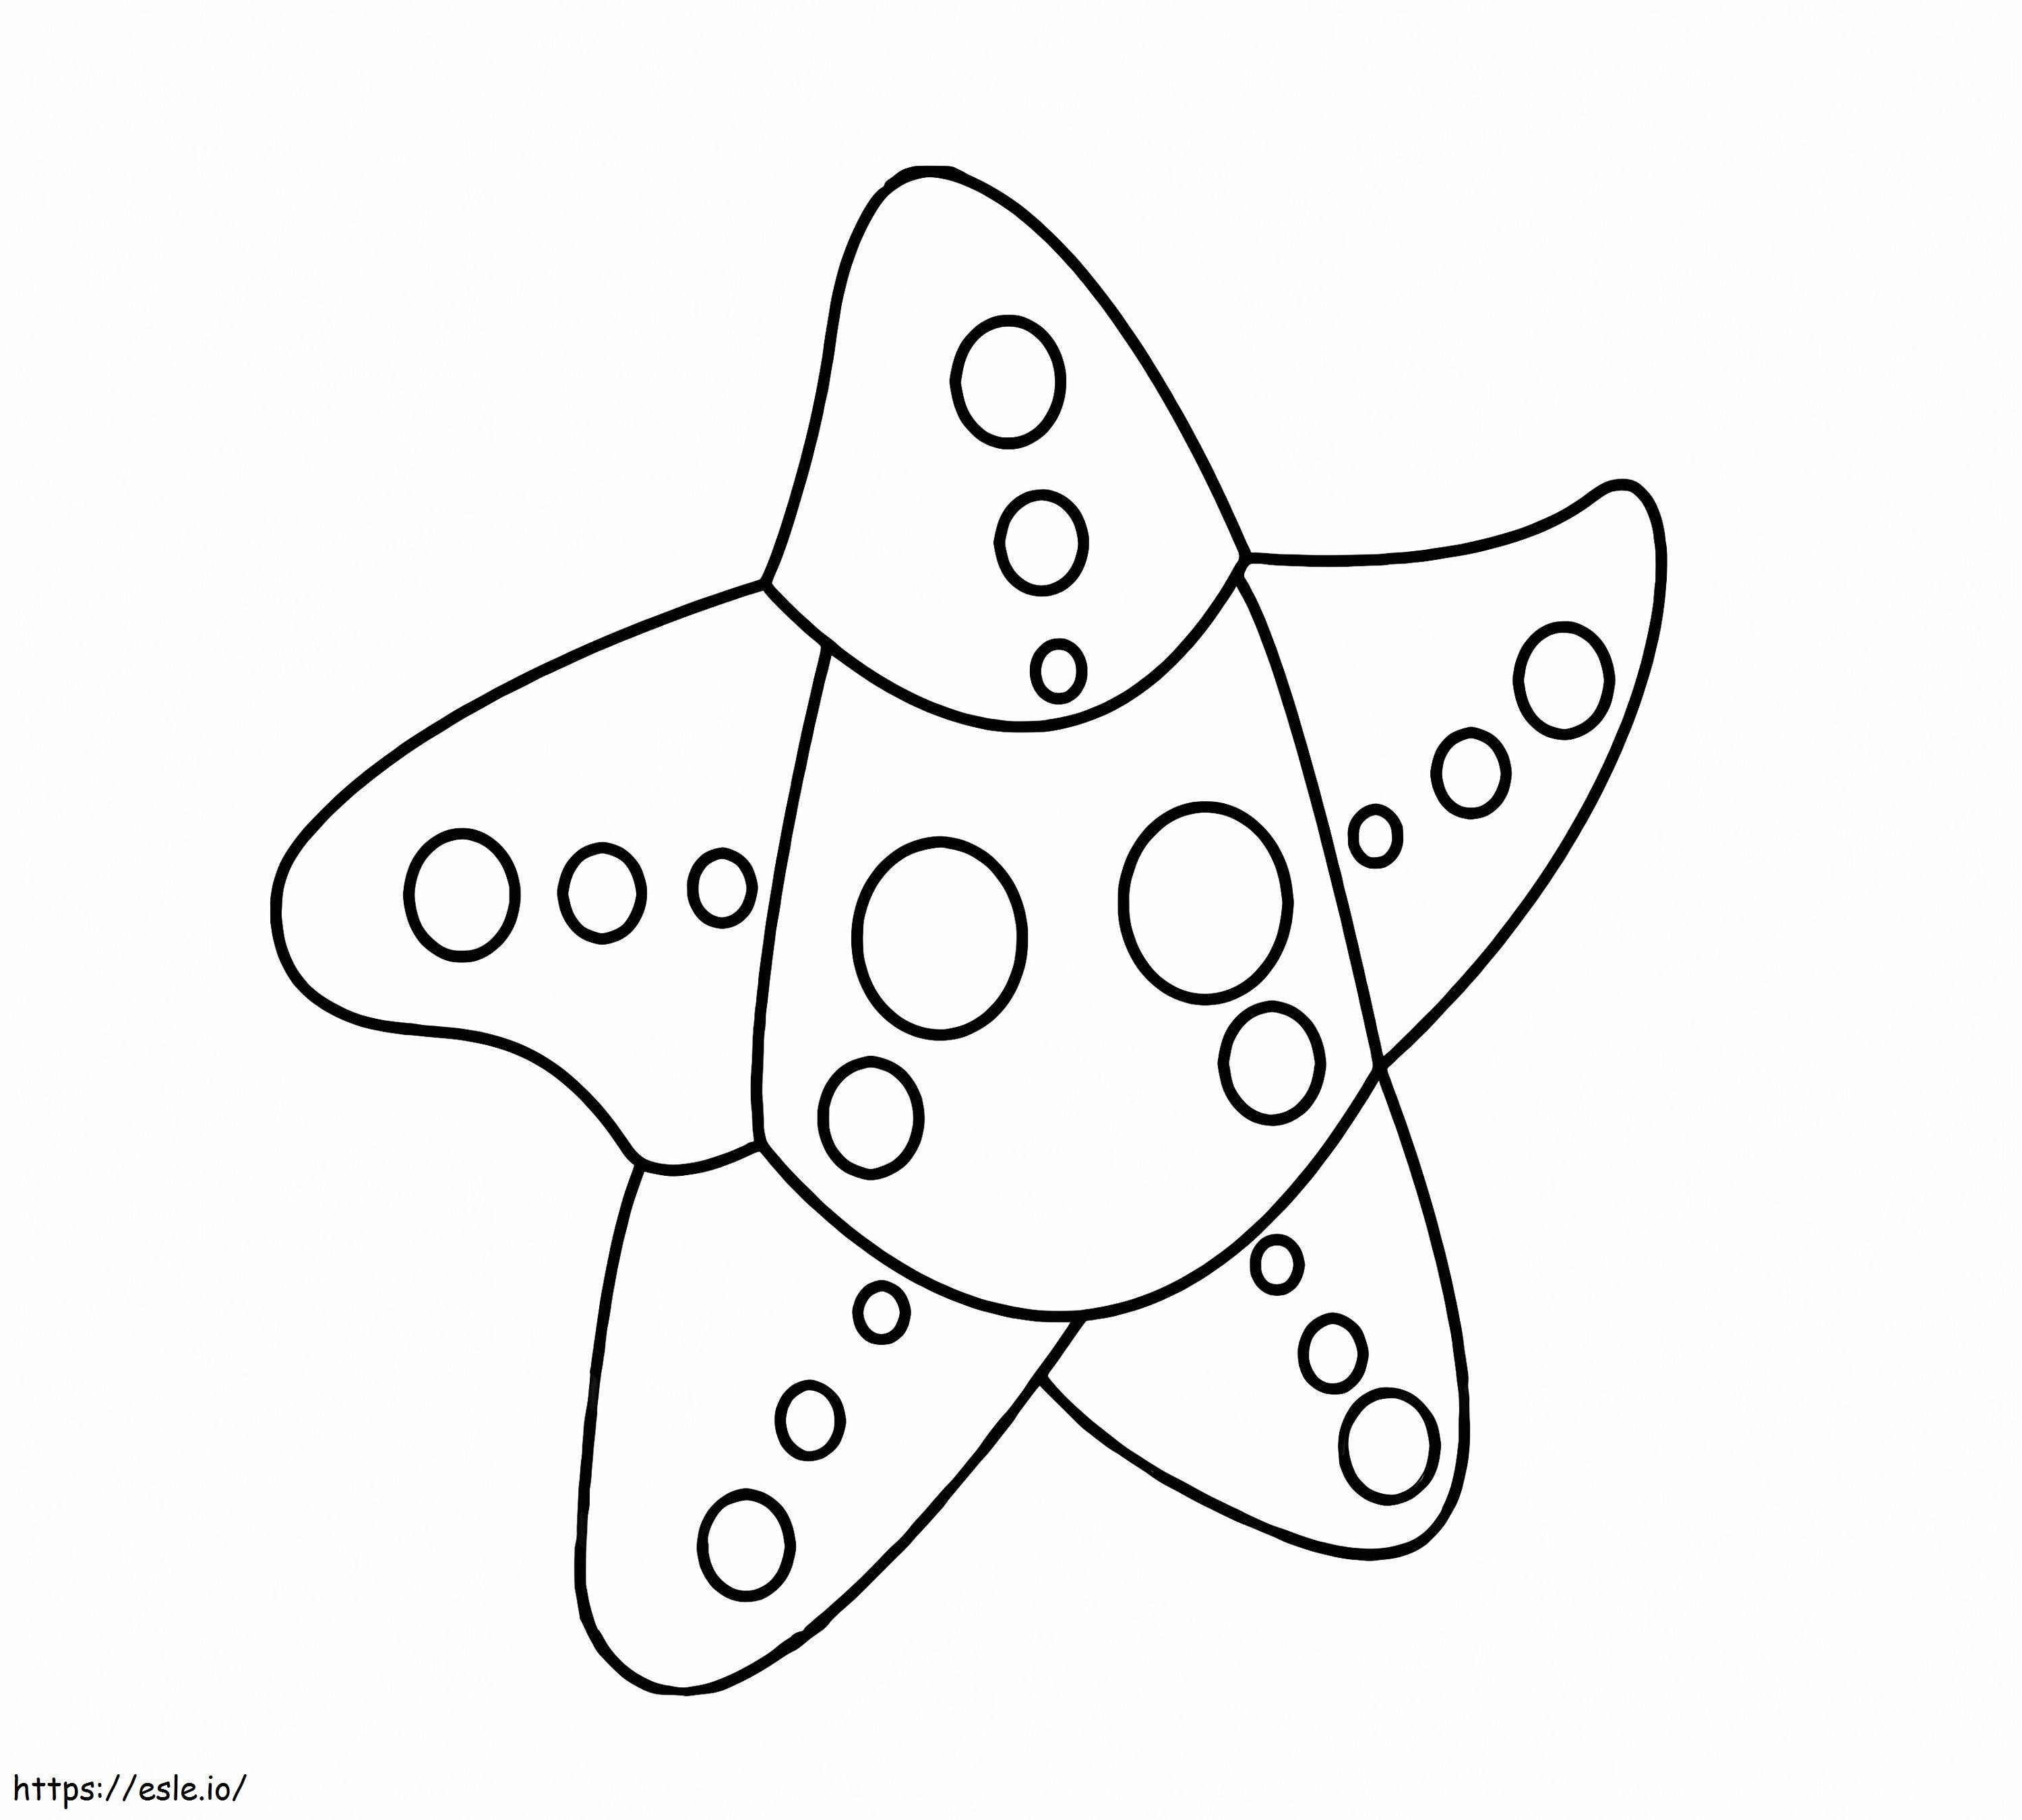 Starfish Adopt Me coloring page